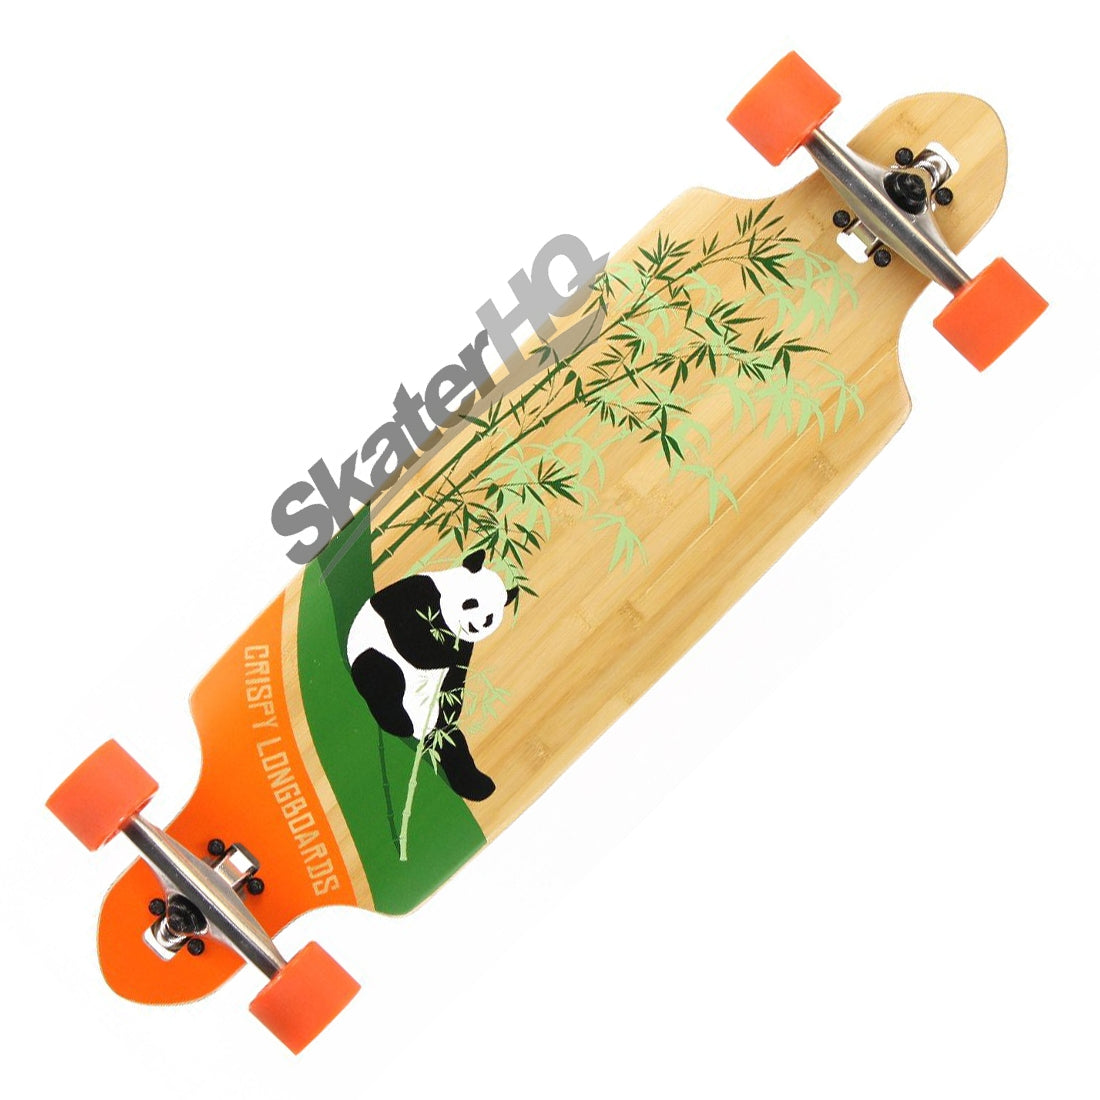 Crispy Drop Thru 36 Complete - Orange Skateboard Completes Longboards